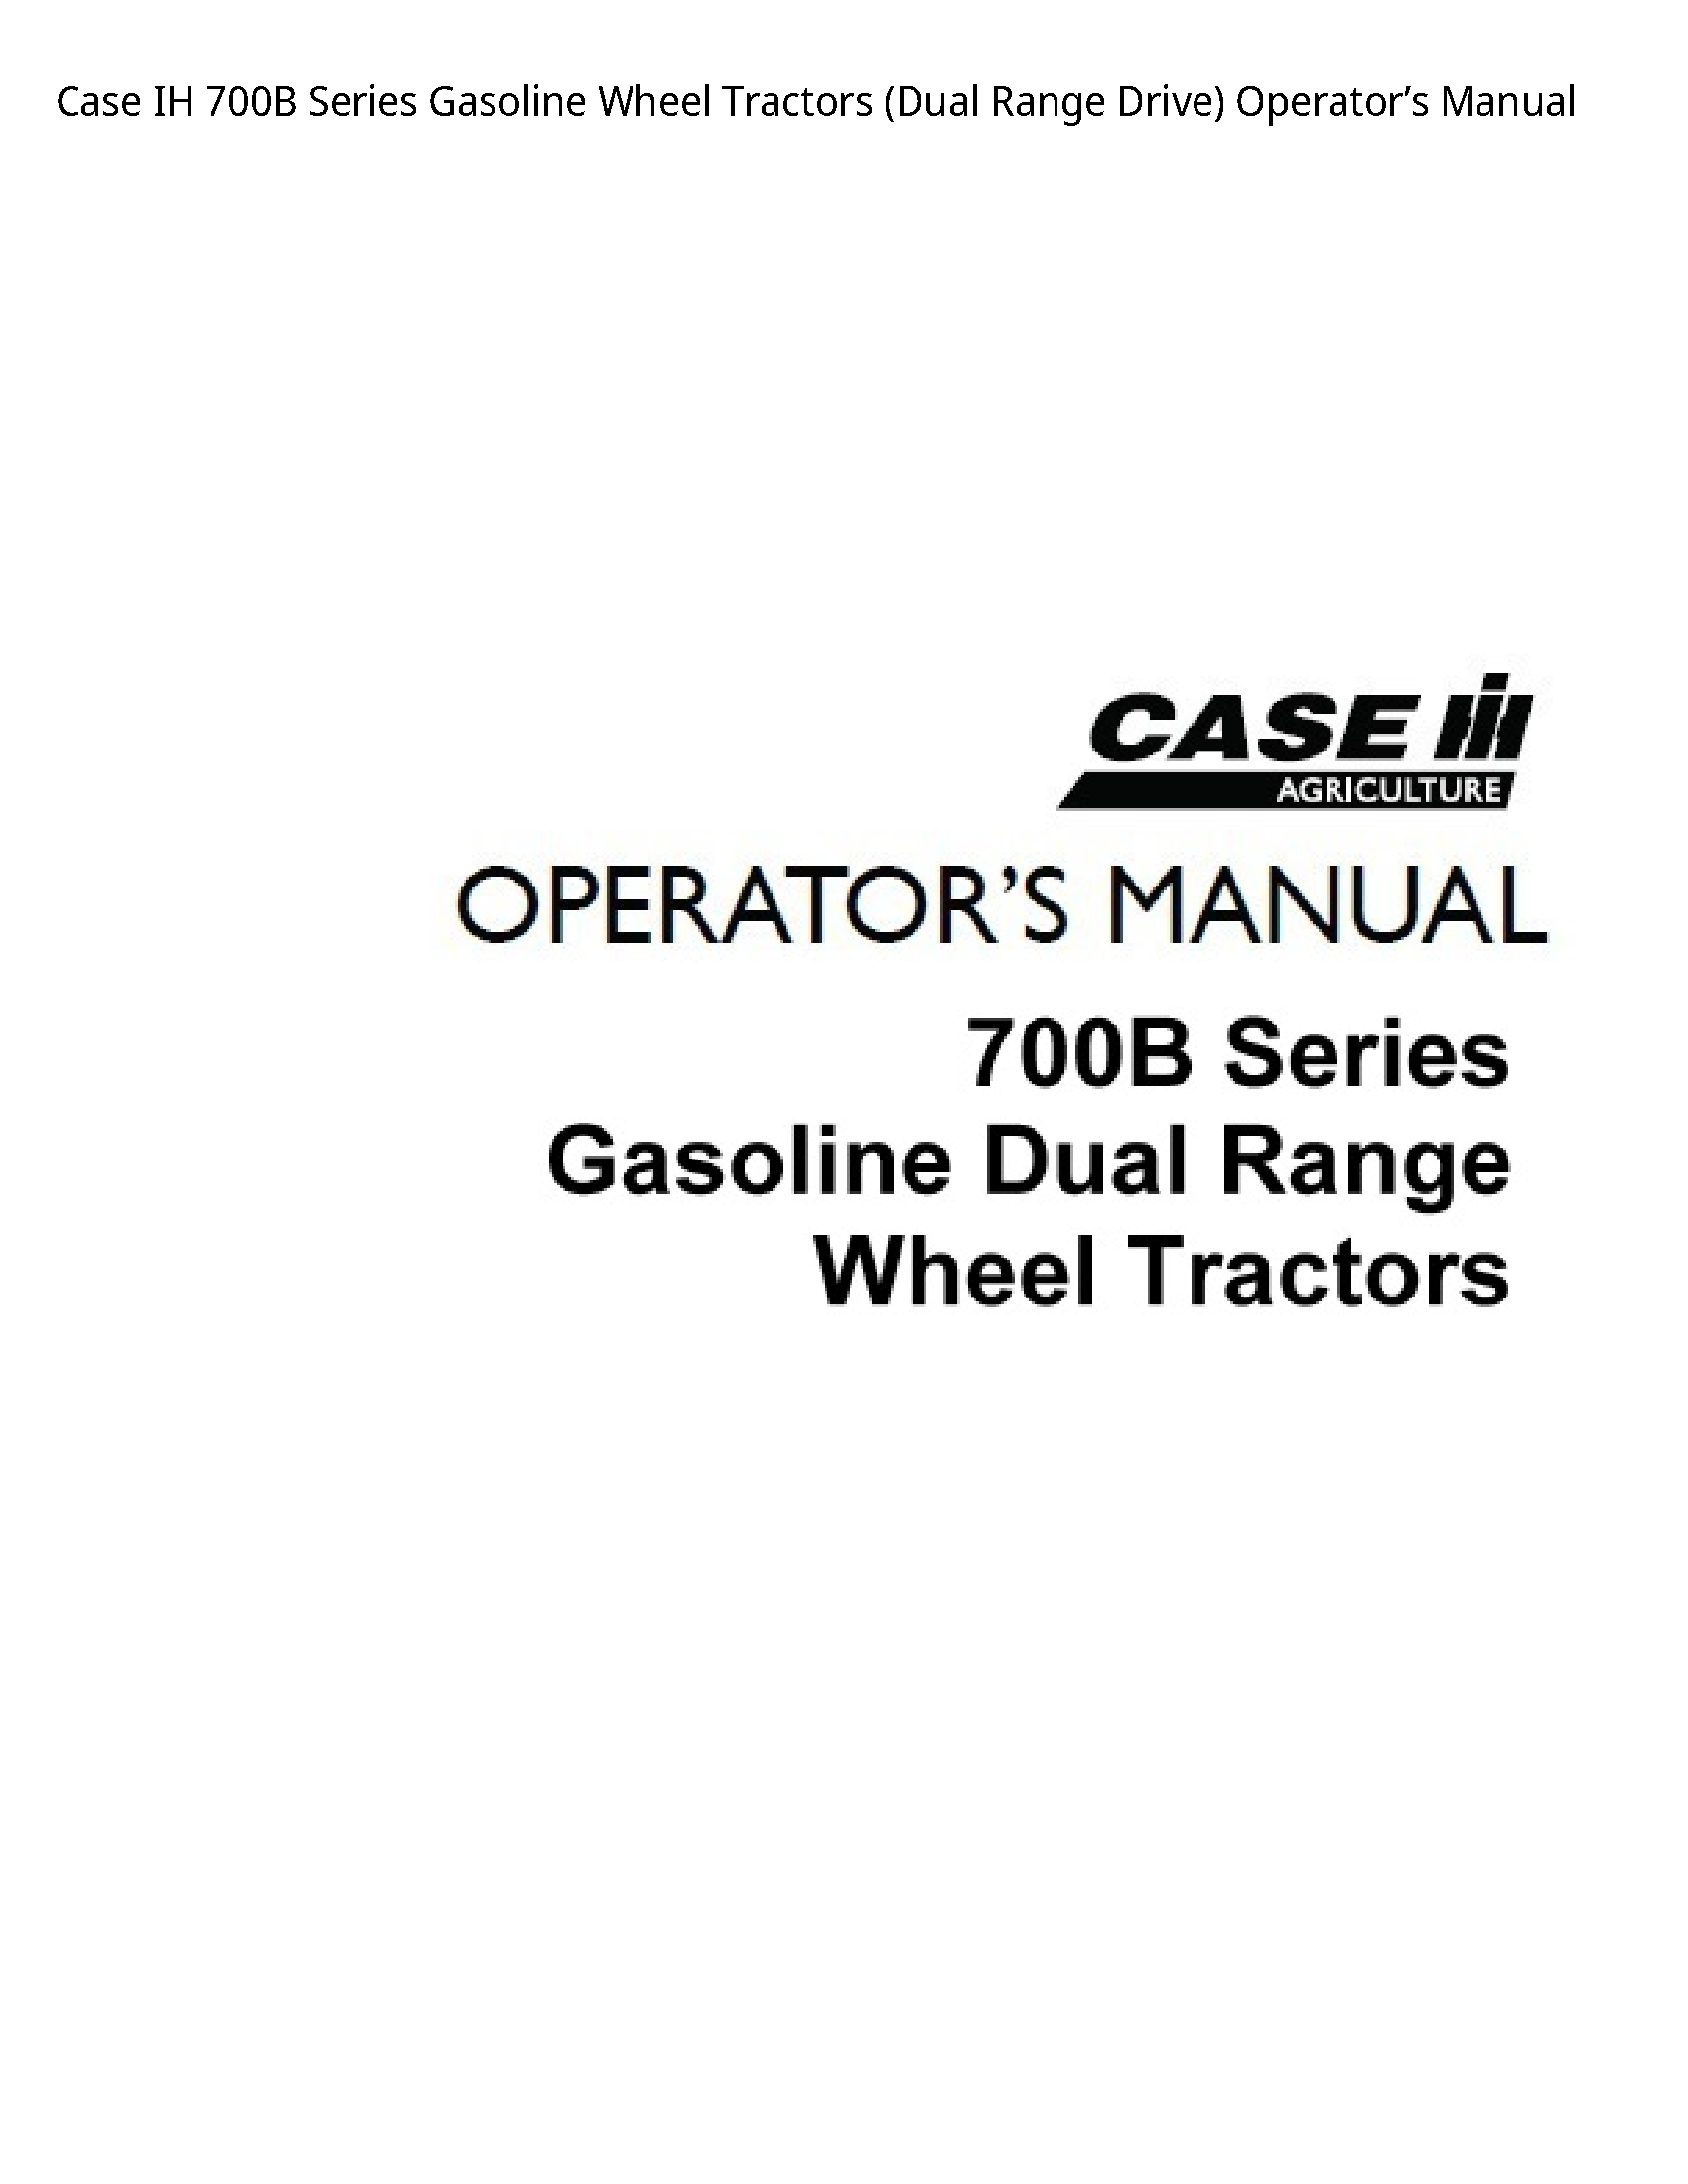 Case/Case IH 700B IH Series Gasoline Wheel Tractors (Dual Range Drive) Operator’s manual